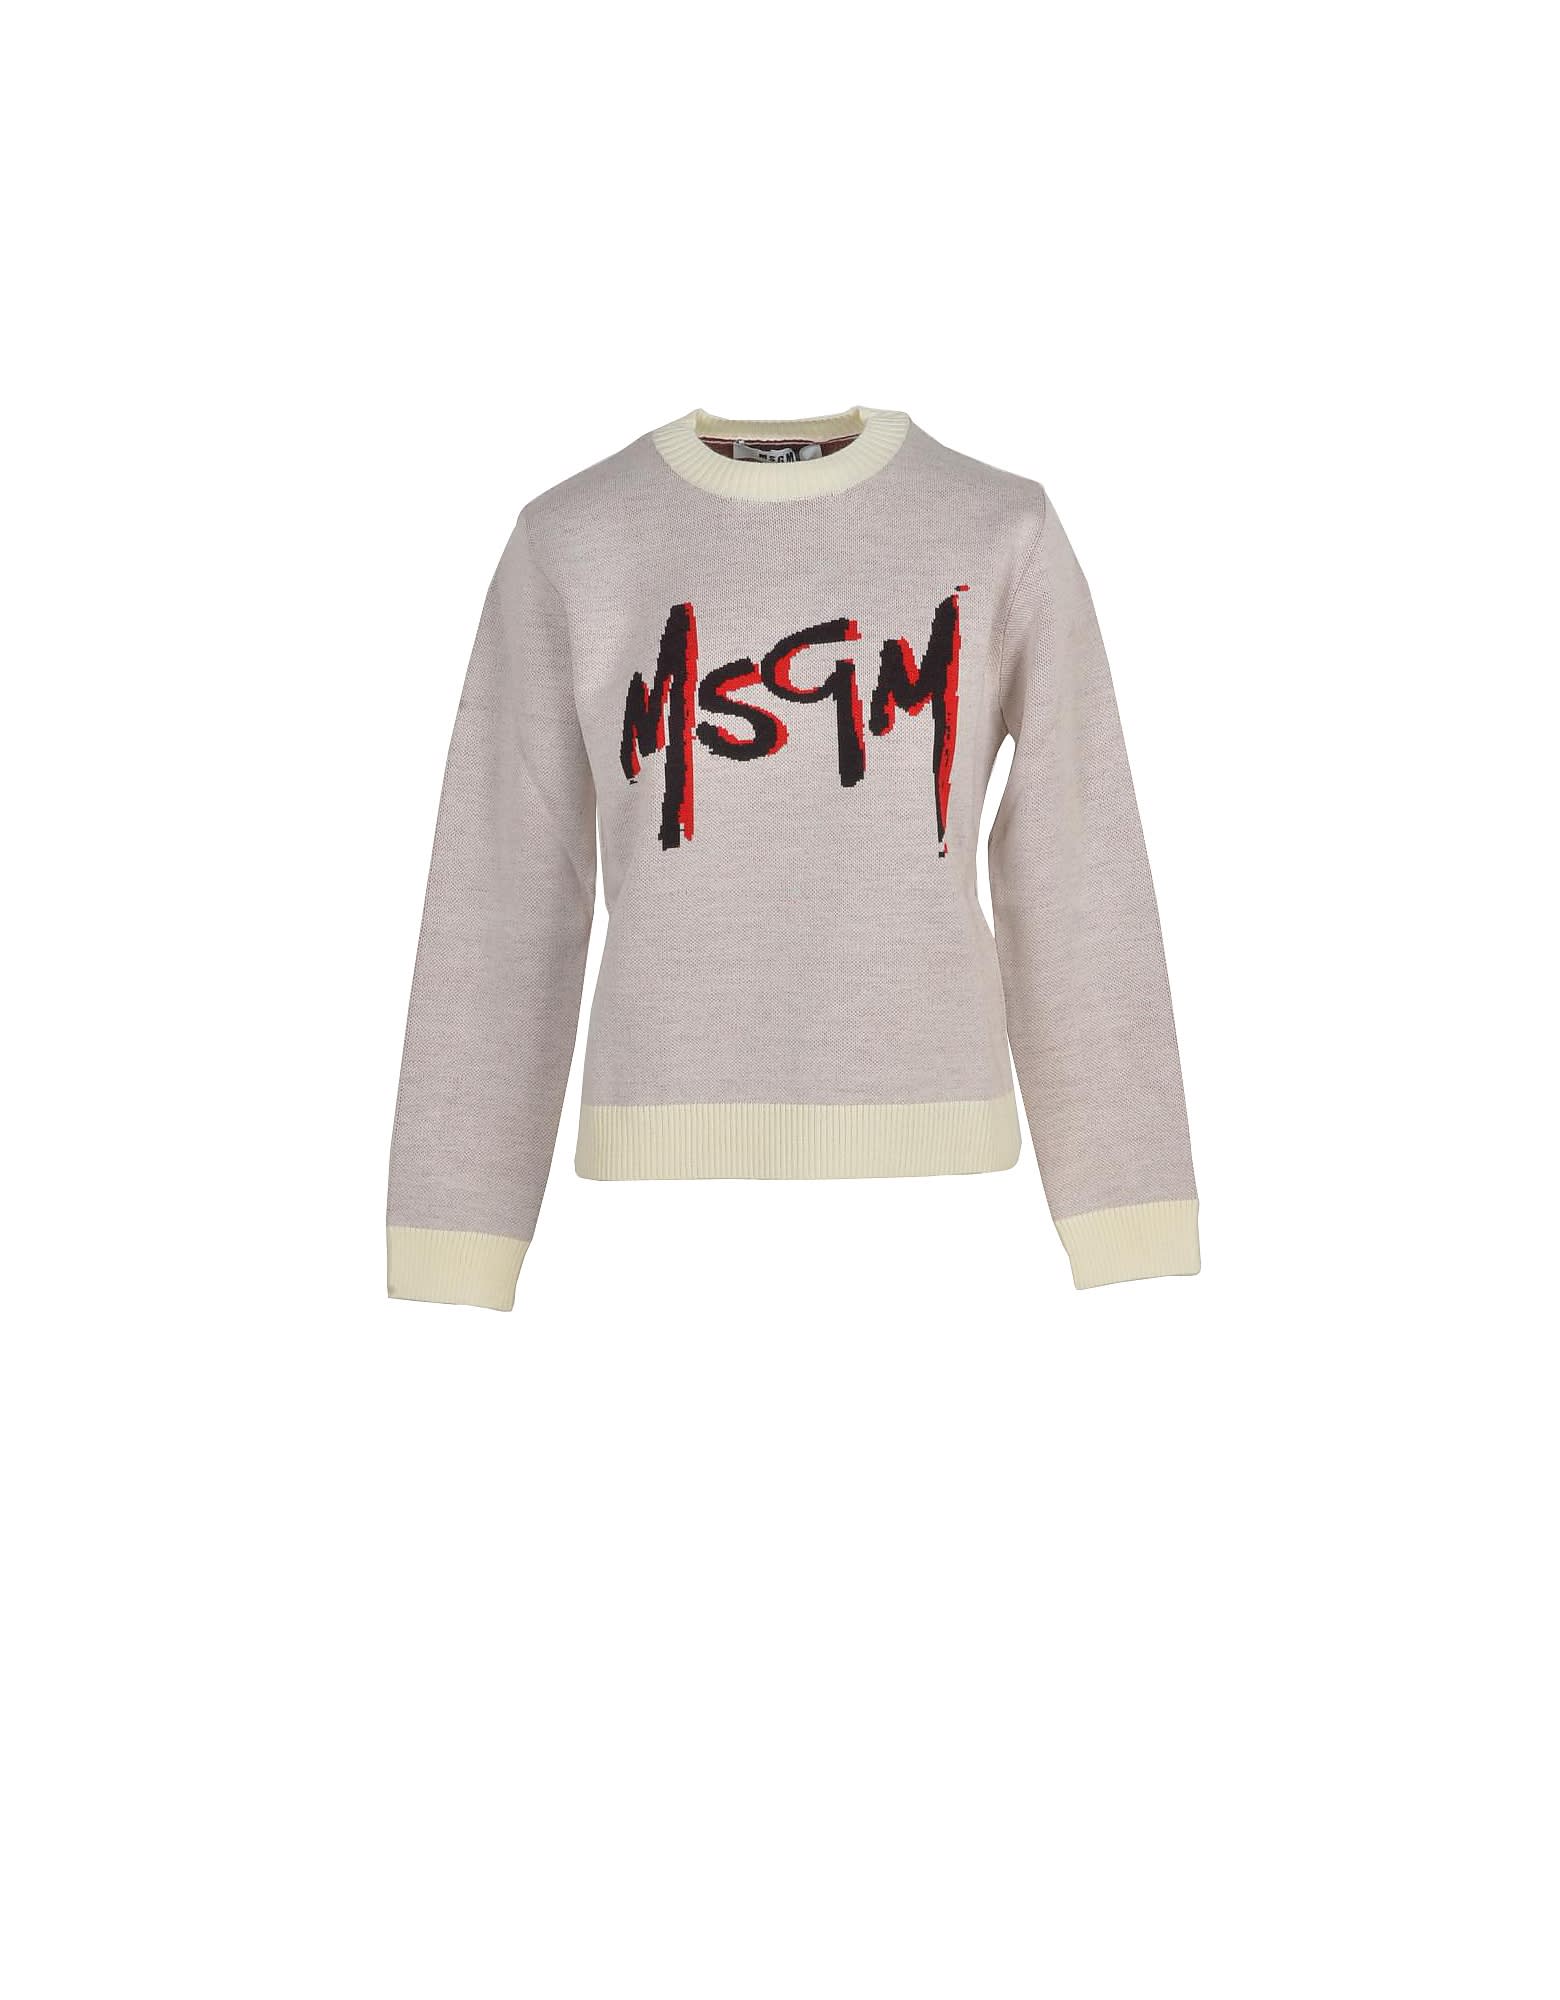 Msgm Womens White / Red Sweater